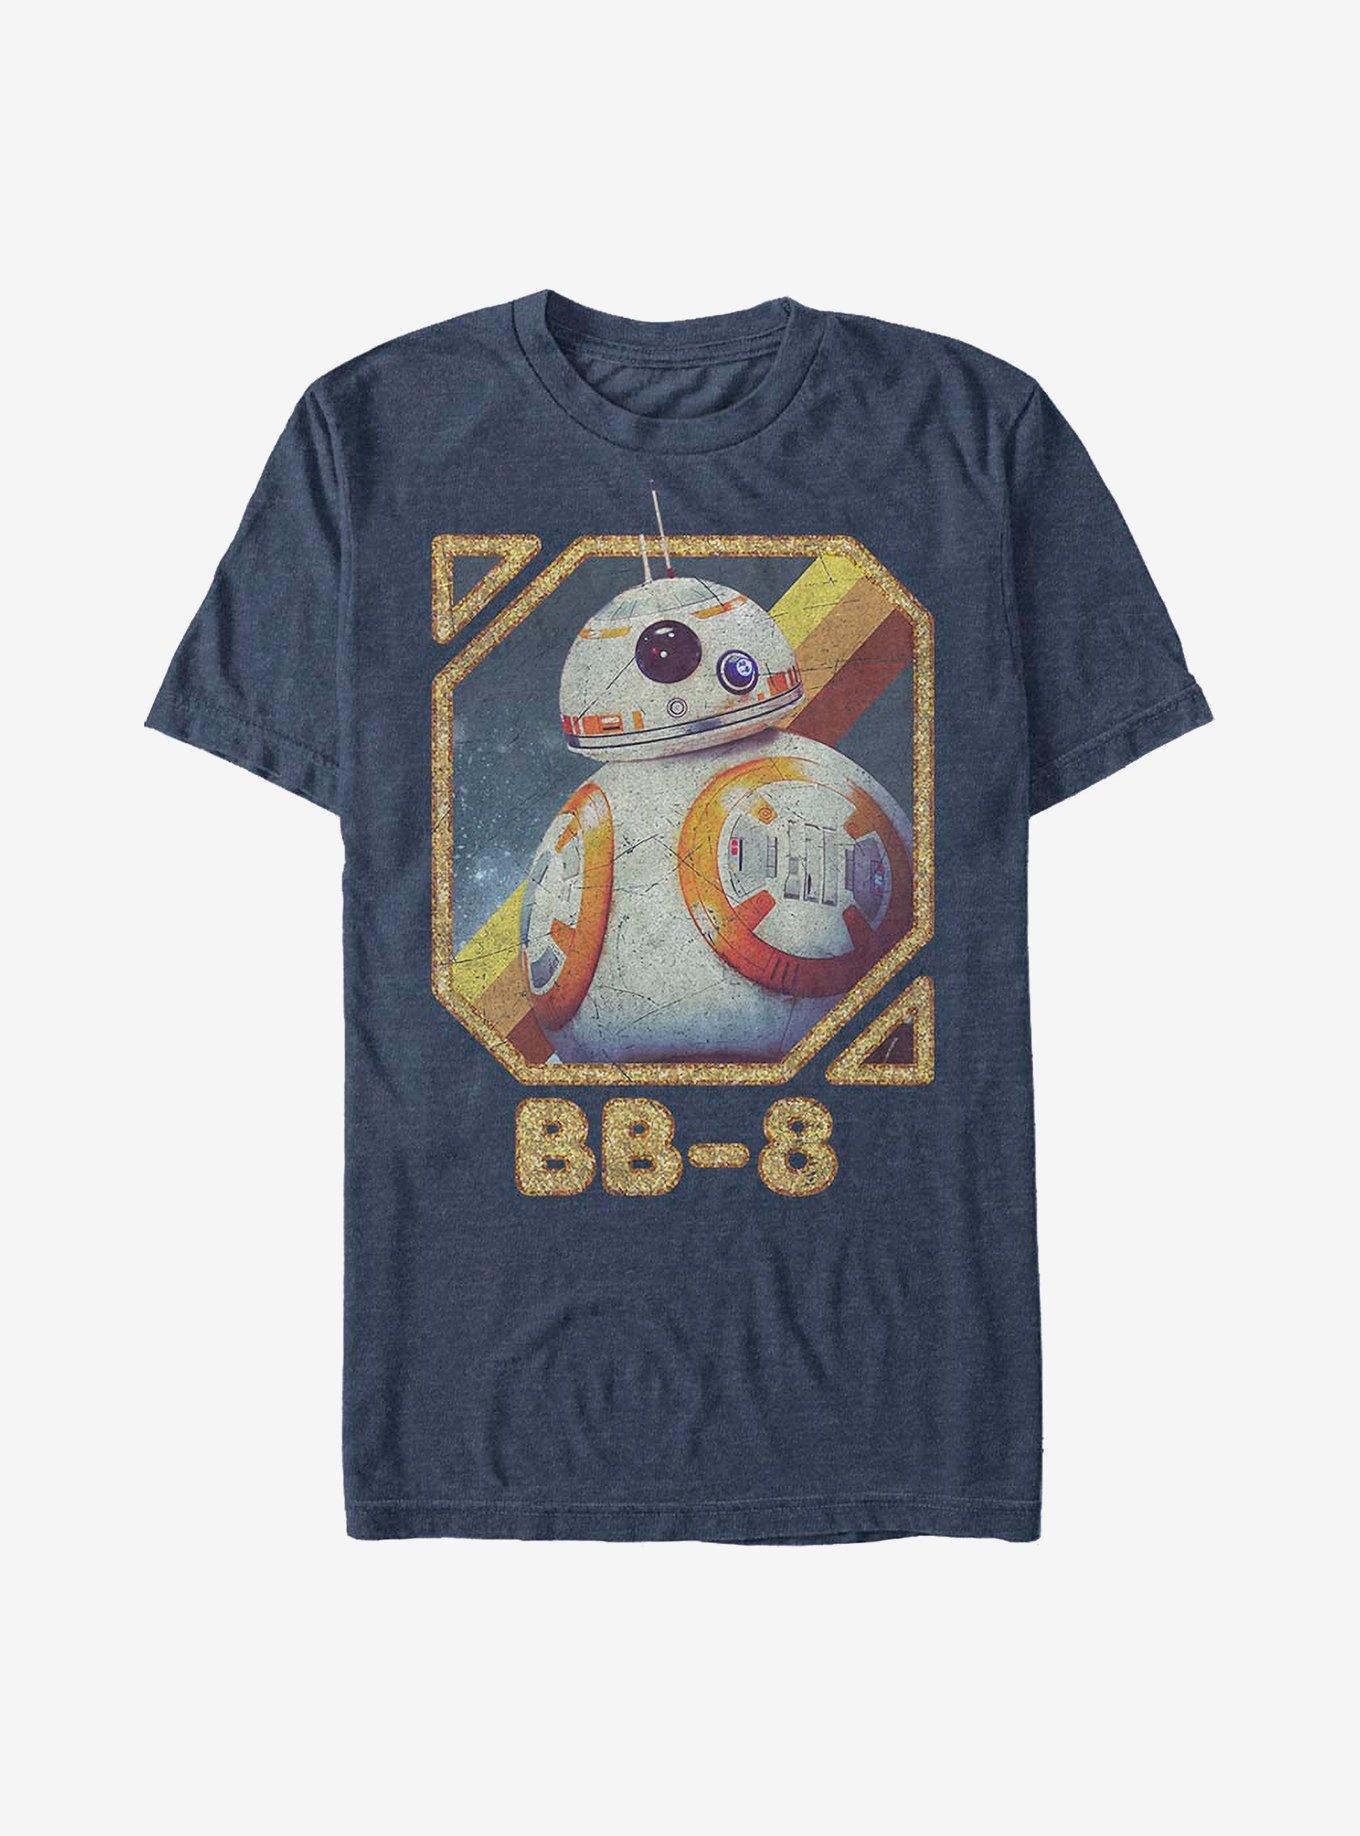 Star Wars: The Force Awakens Roller BB-8 T-Shirt